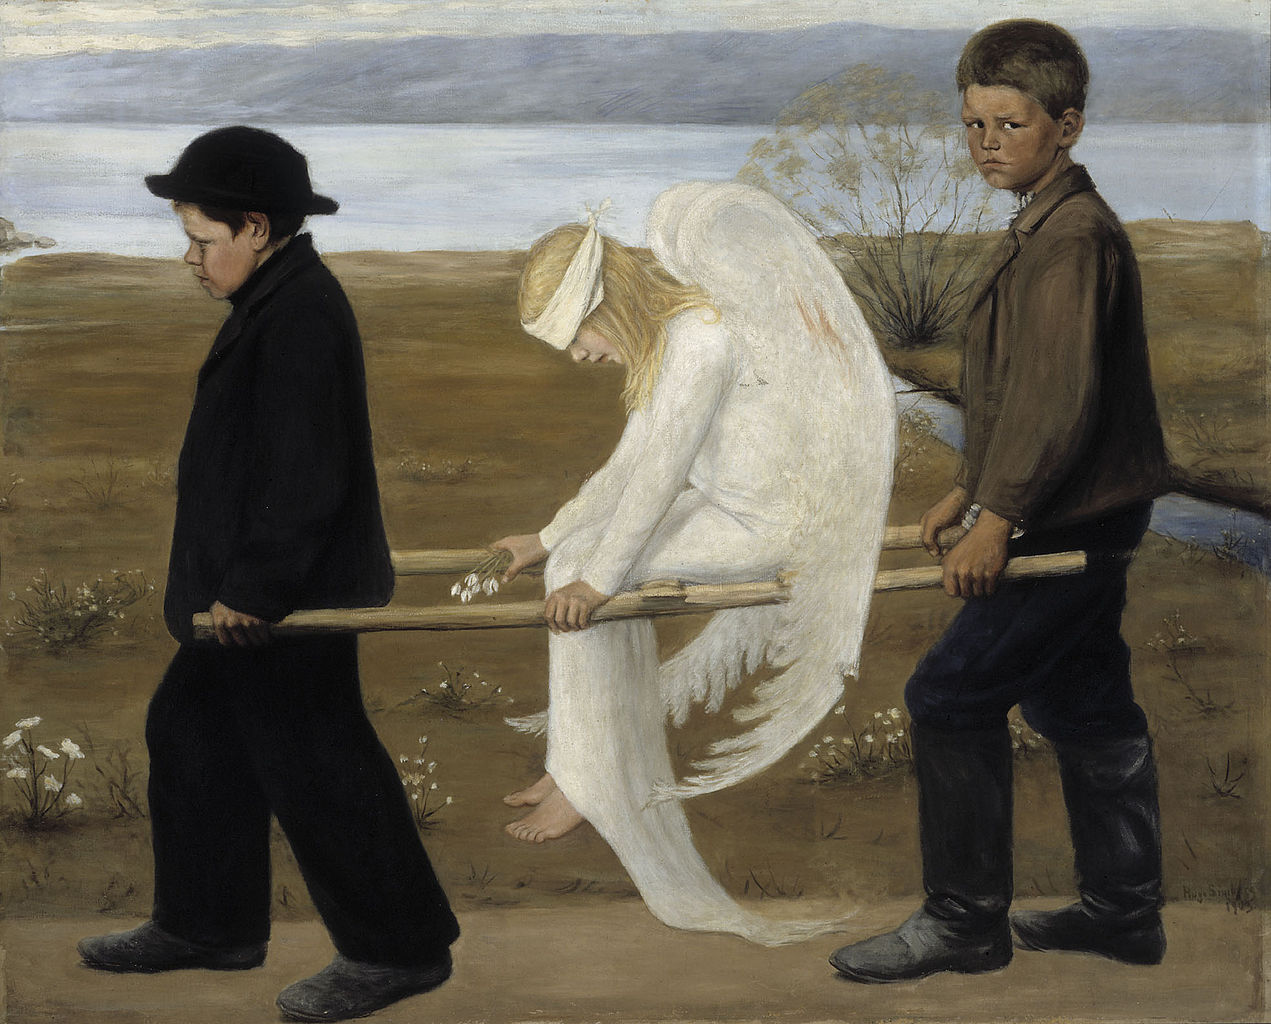 L’ange blessé by Hugo Simberg - 1903 Galerie Nationale Finlandaise